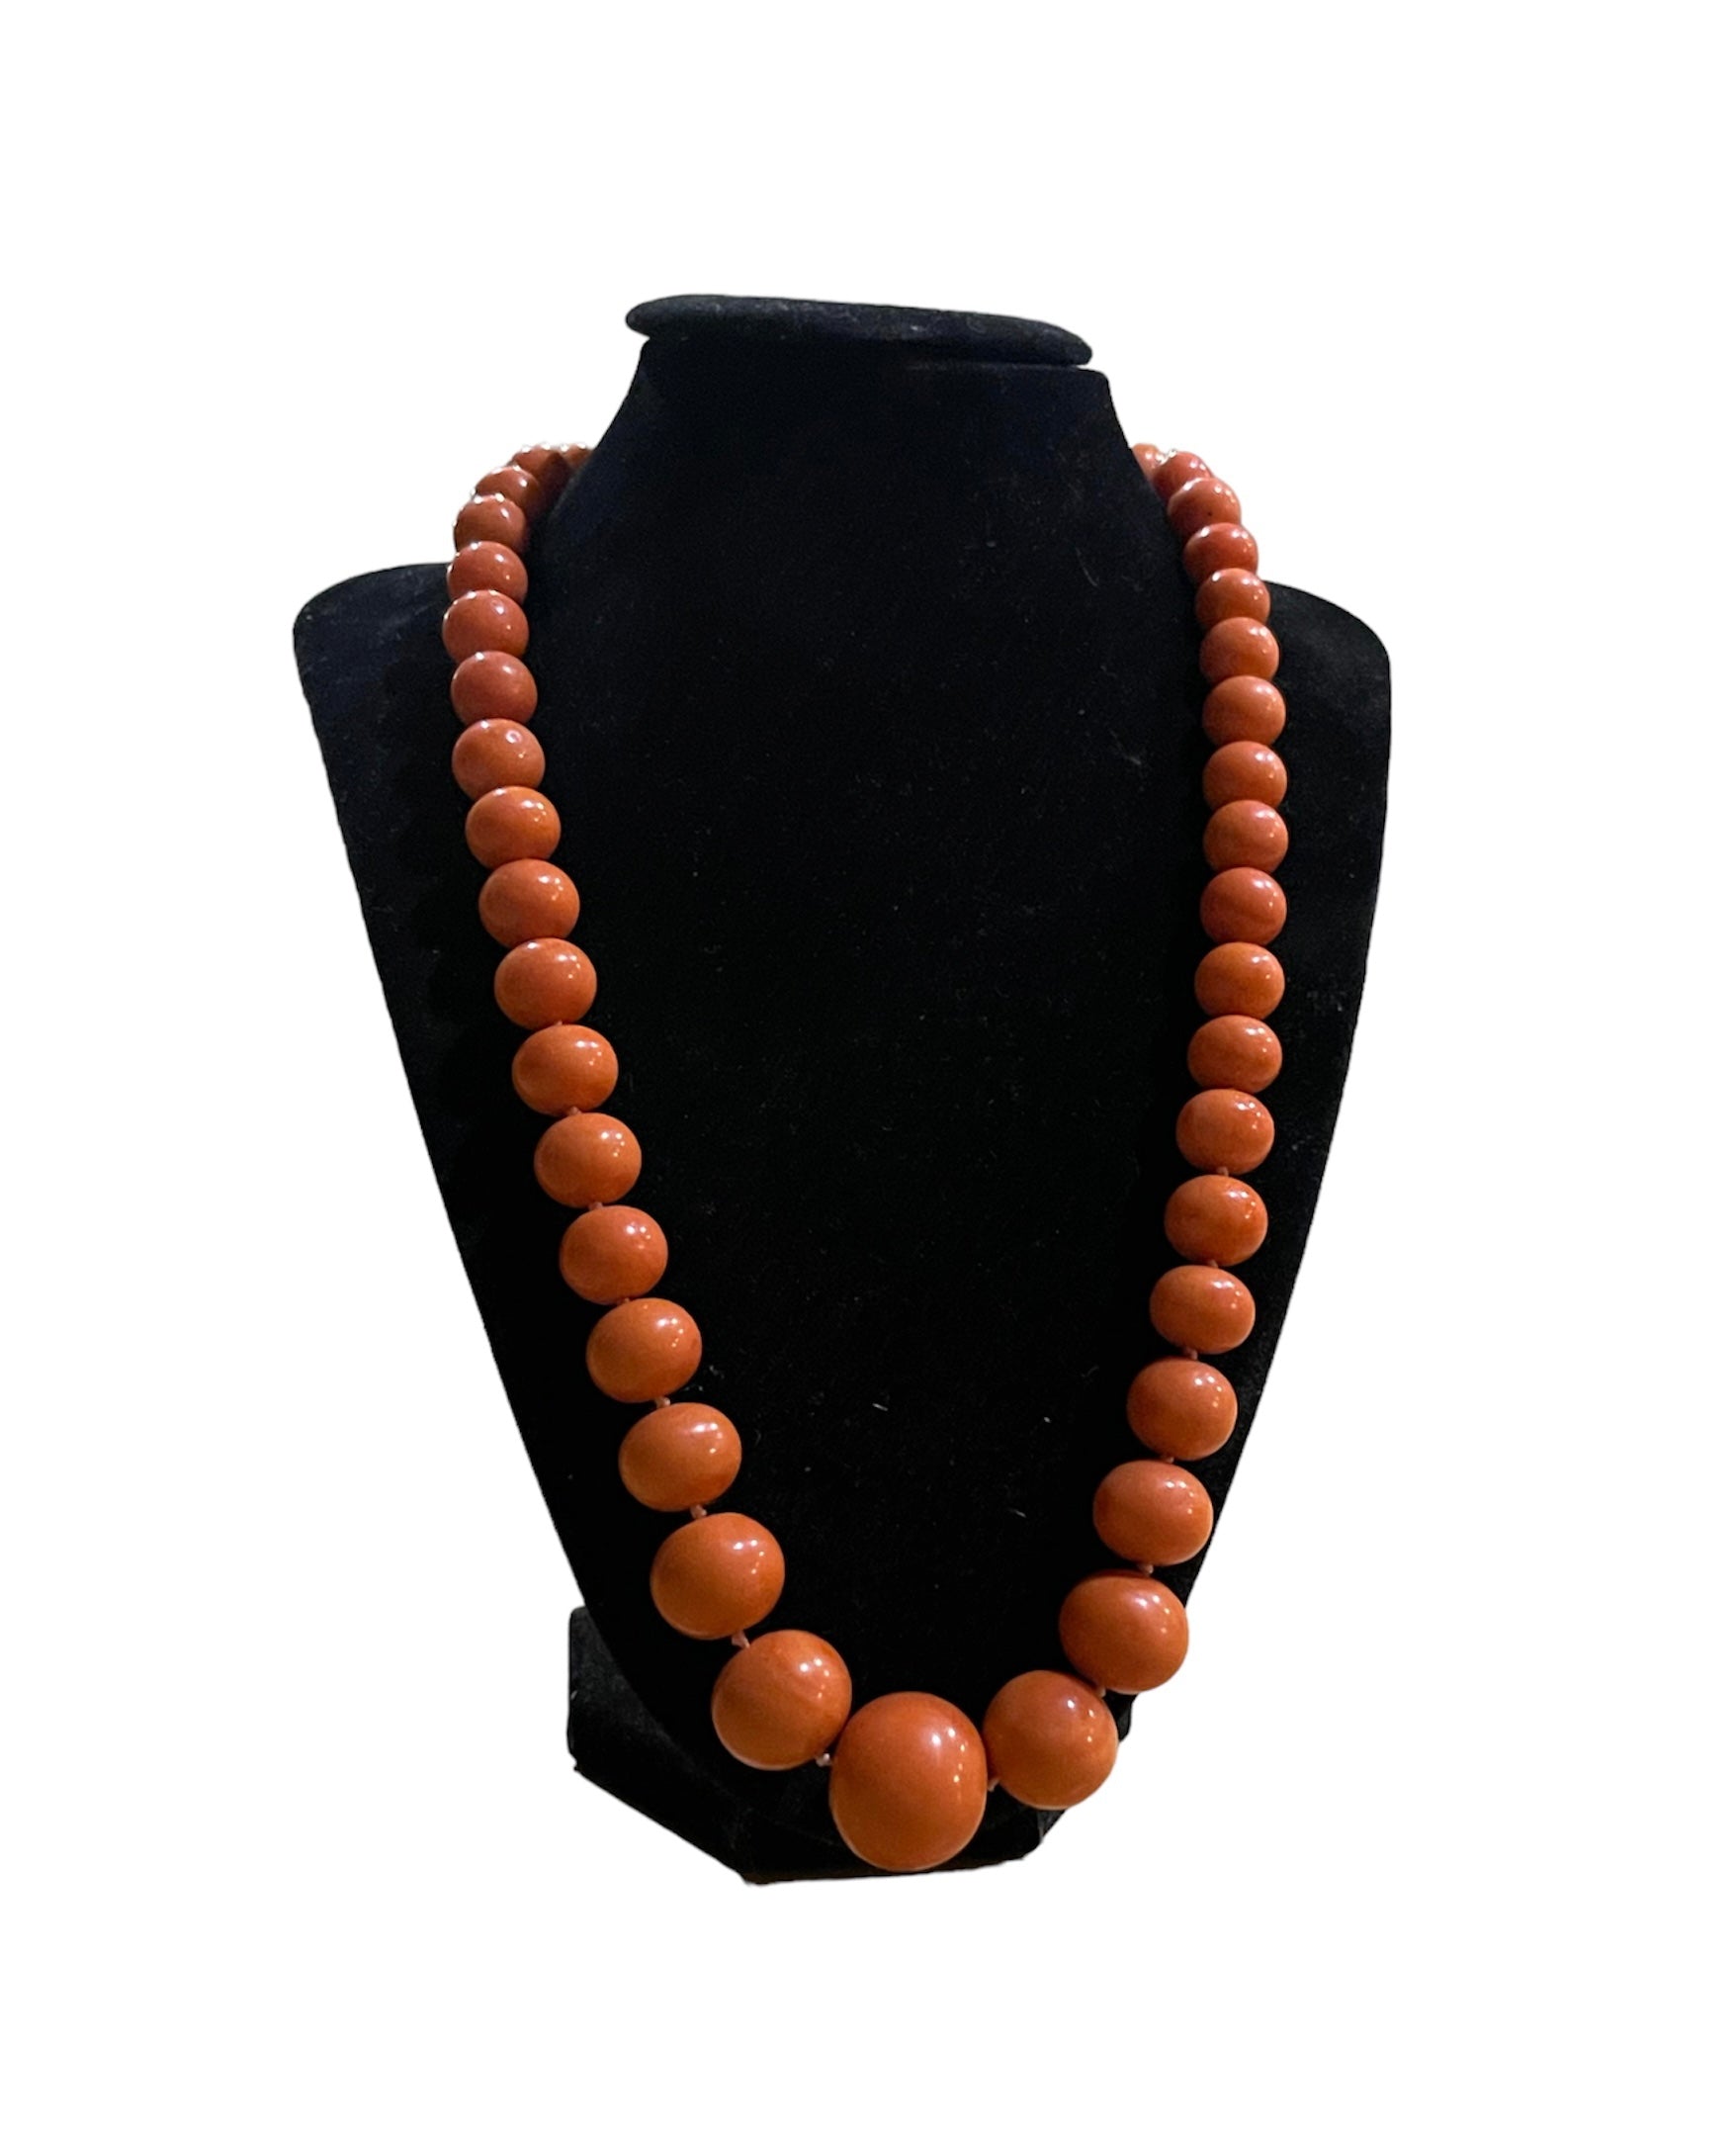 Antique coral necklace, Vintage coral necklace Ukrainian national coral  necklace | eBay